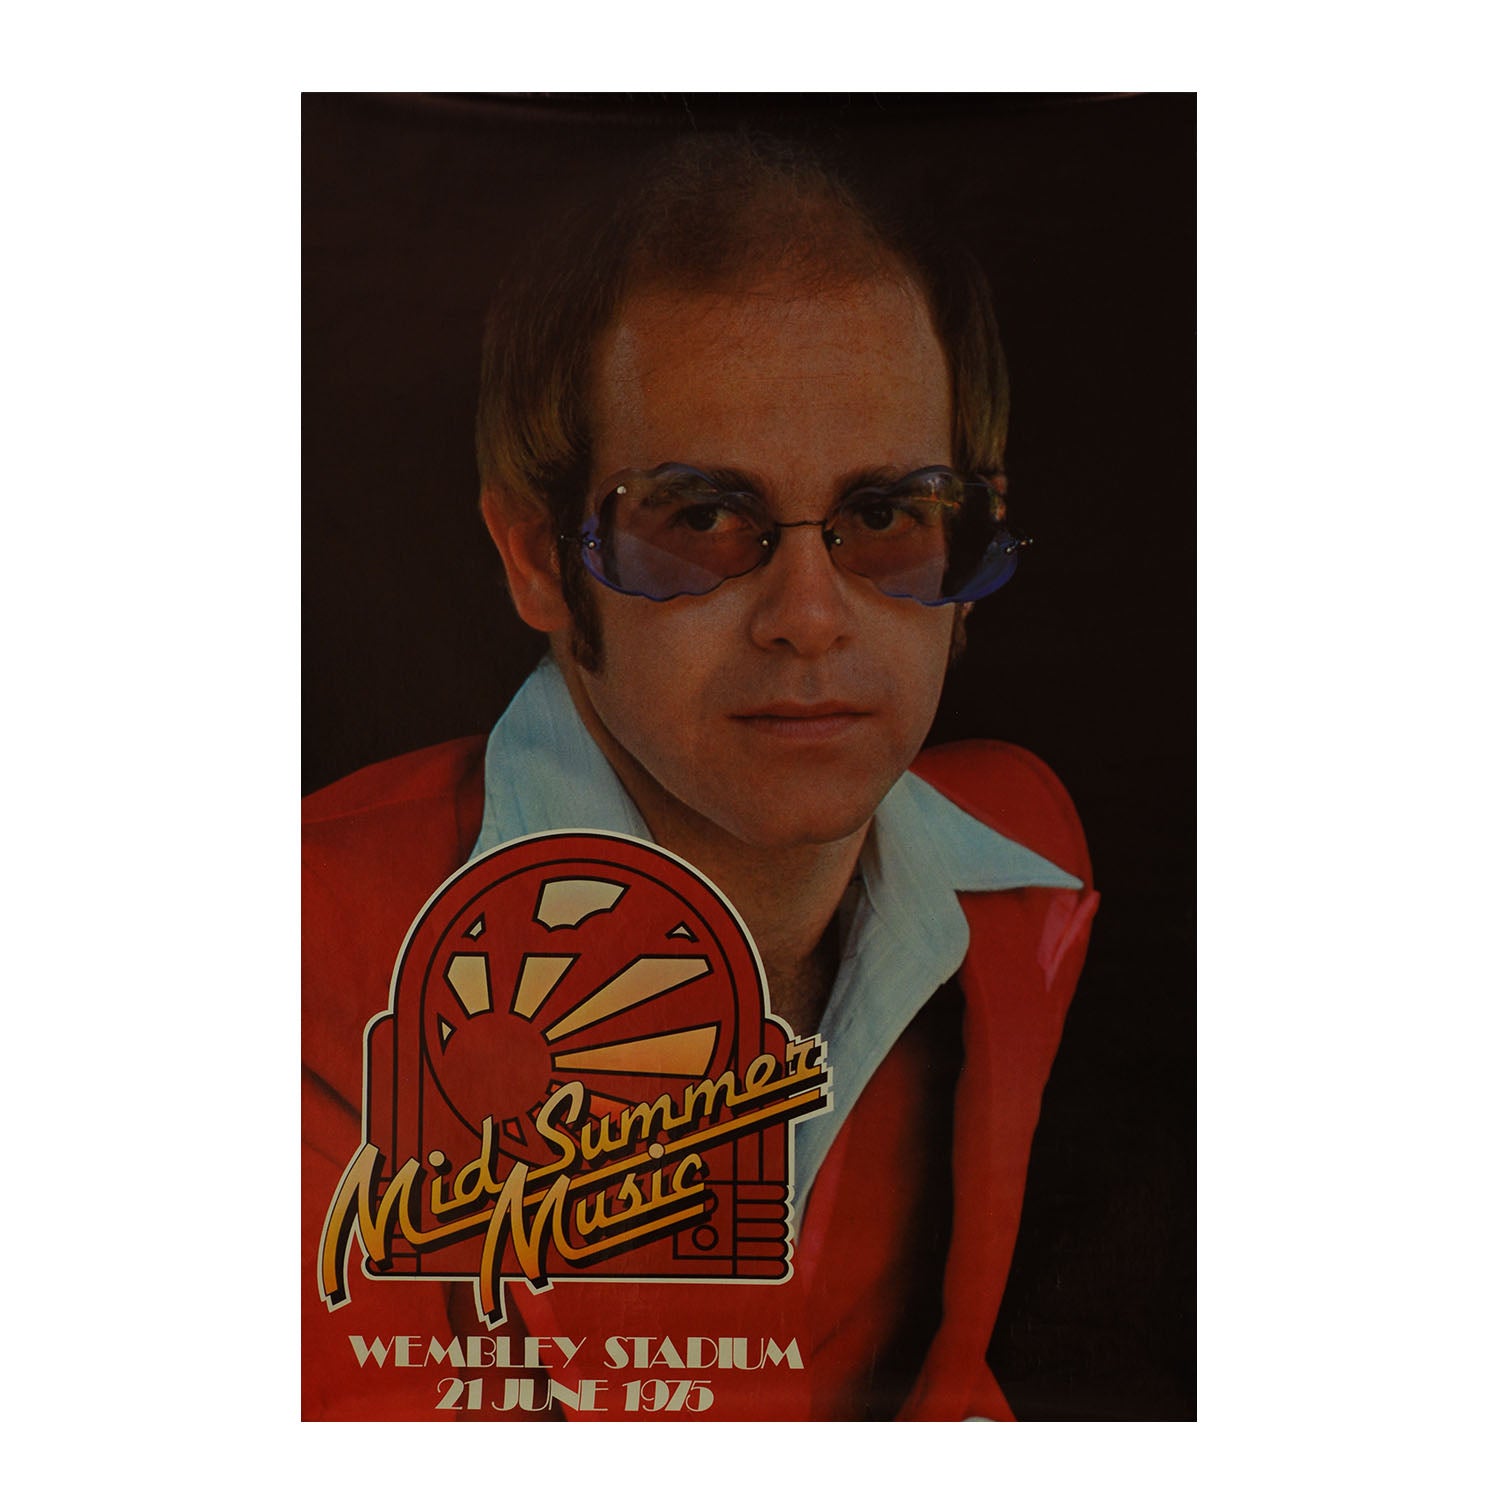 Original poster: Midsummer Music Wembley Stadium. Elton John